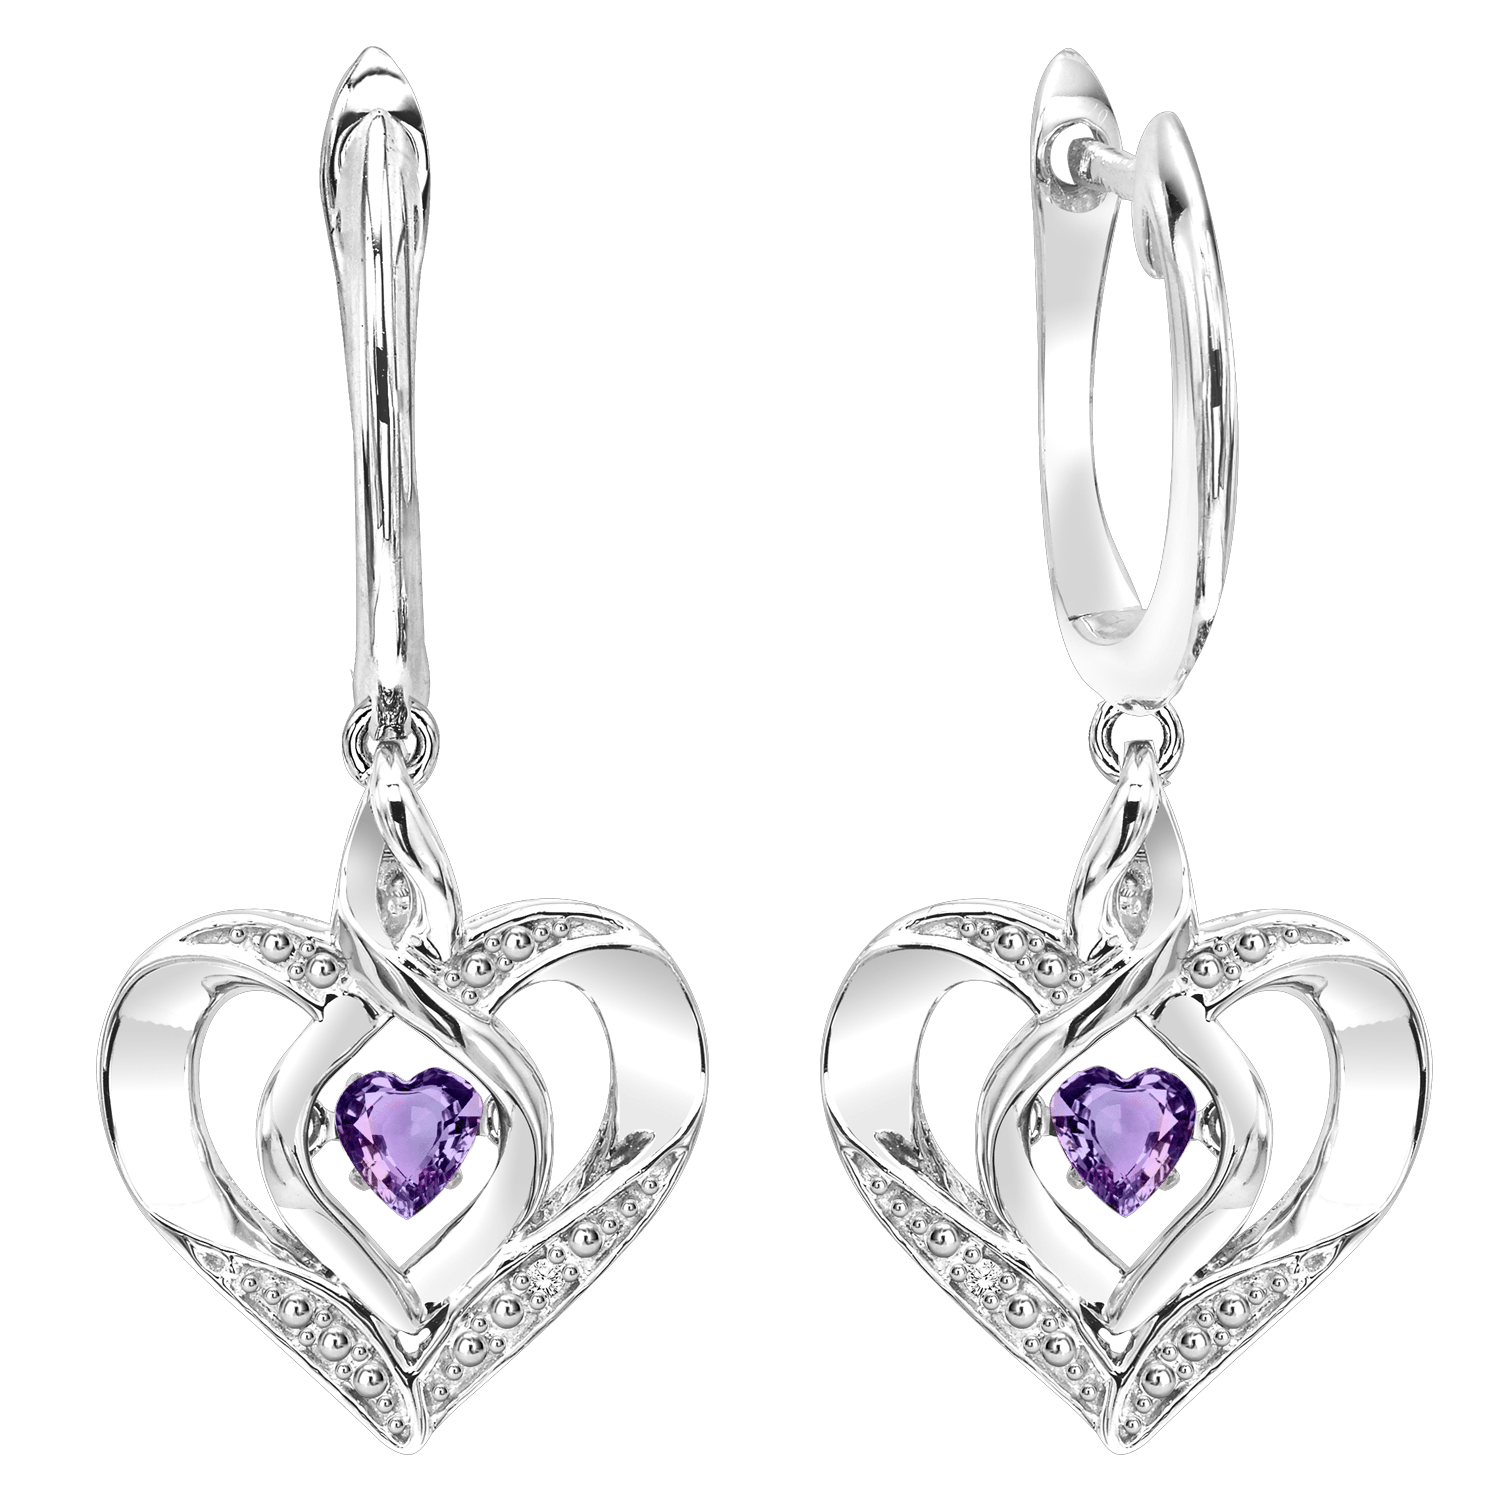 BW James Jewelers Earrings 16 Page Christmas Catalog Offer SS Diamond ROL-Birthst Heart Amethyst Basics Earring